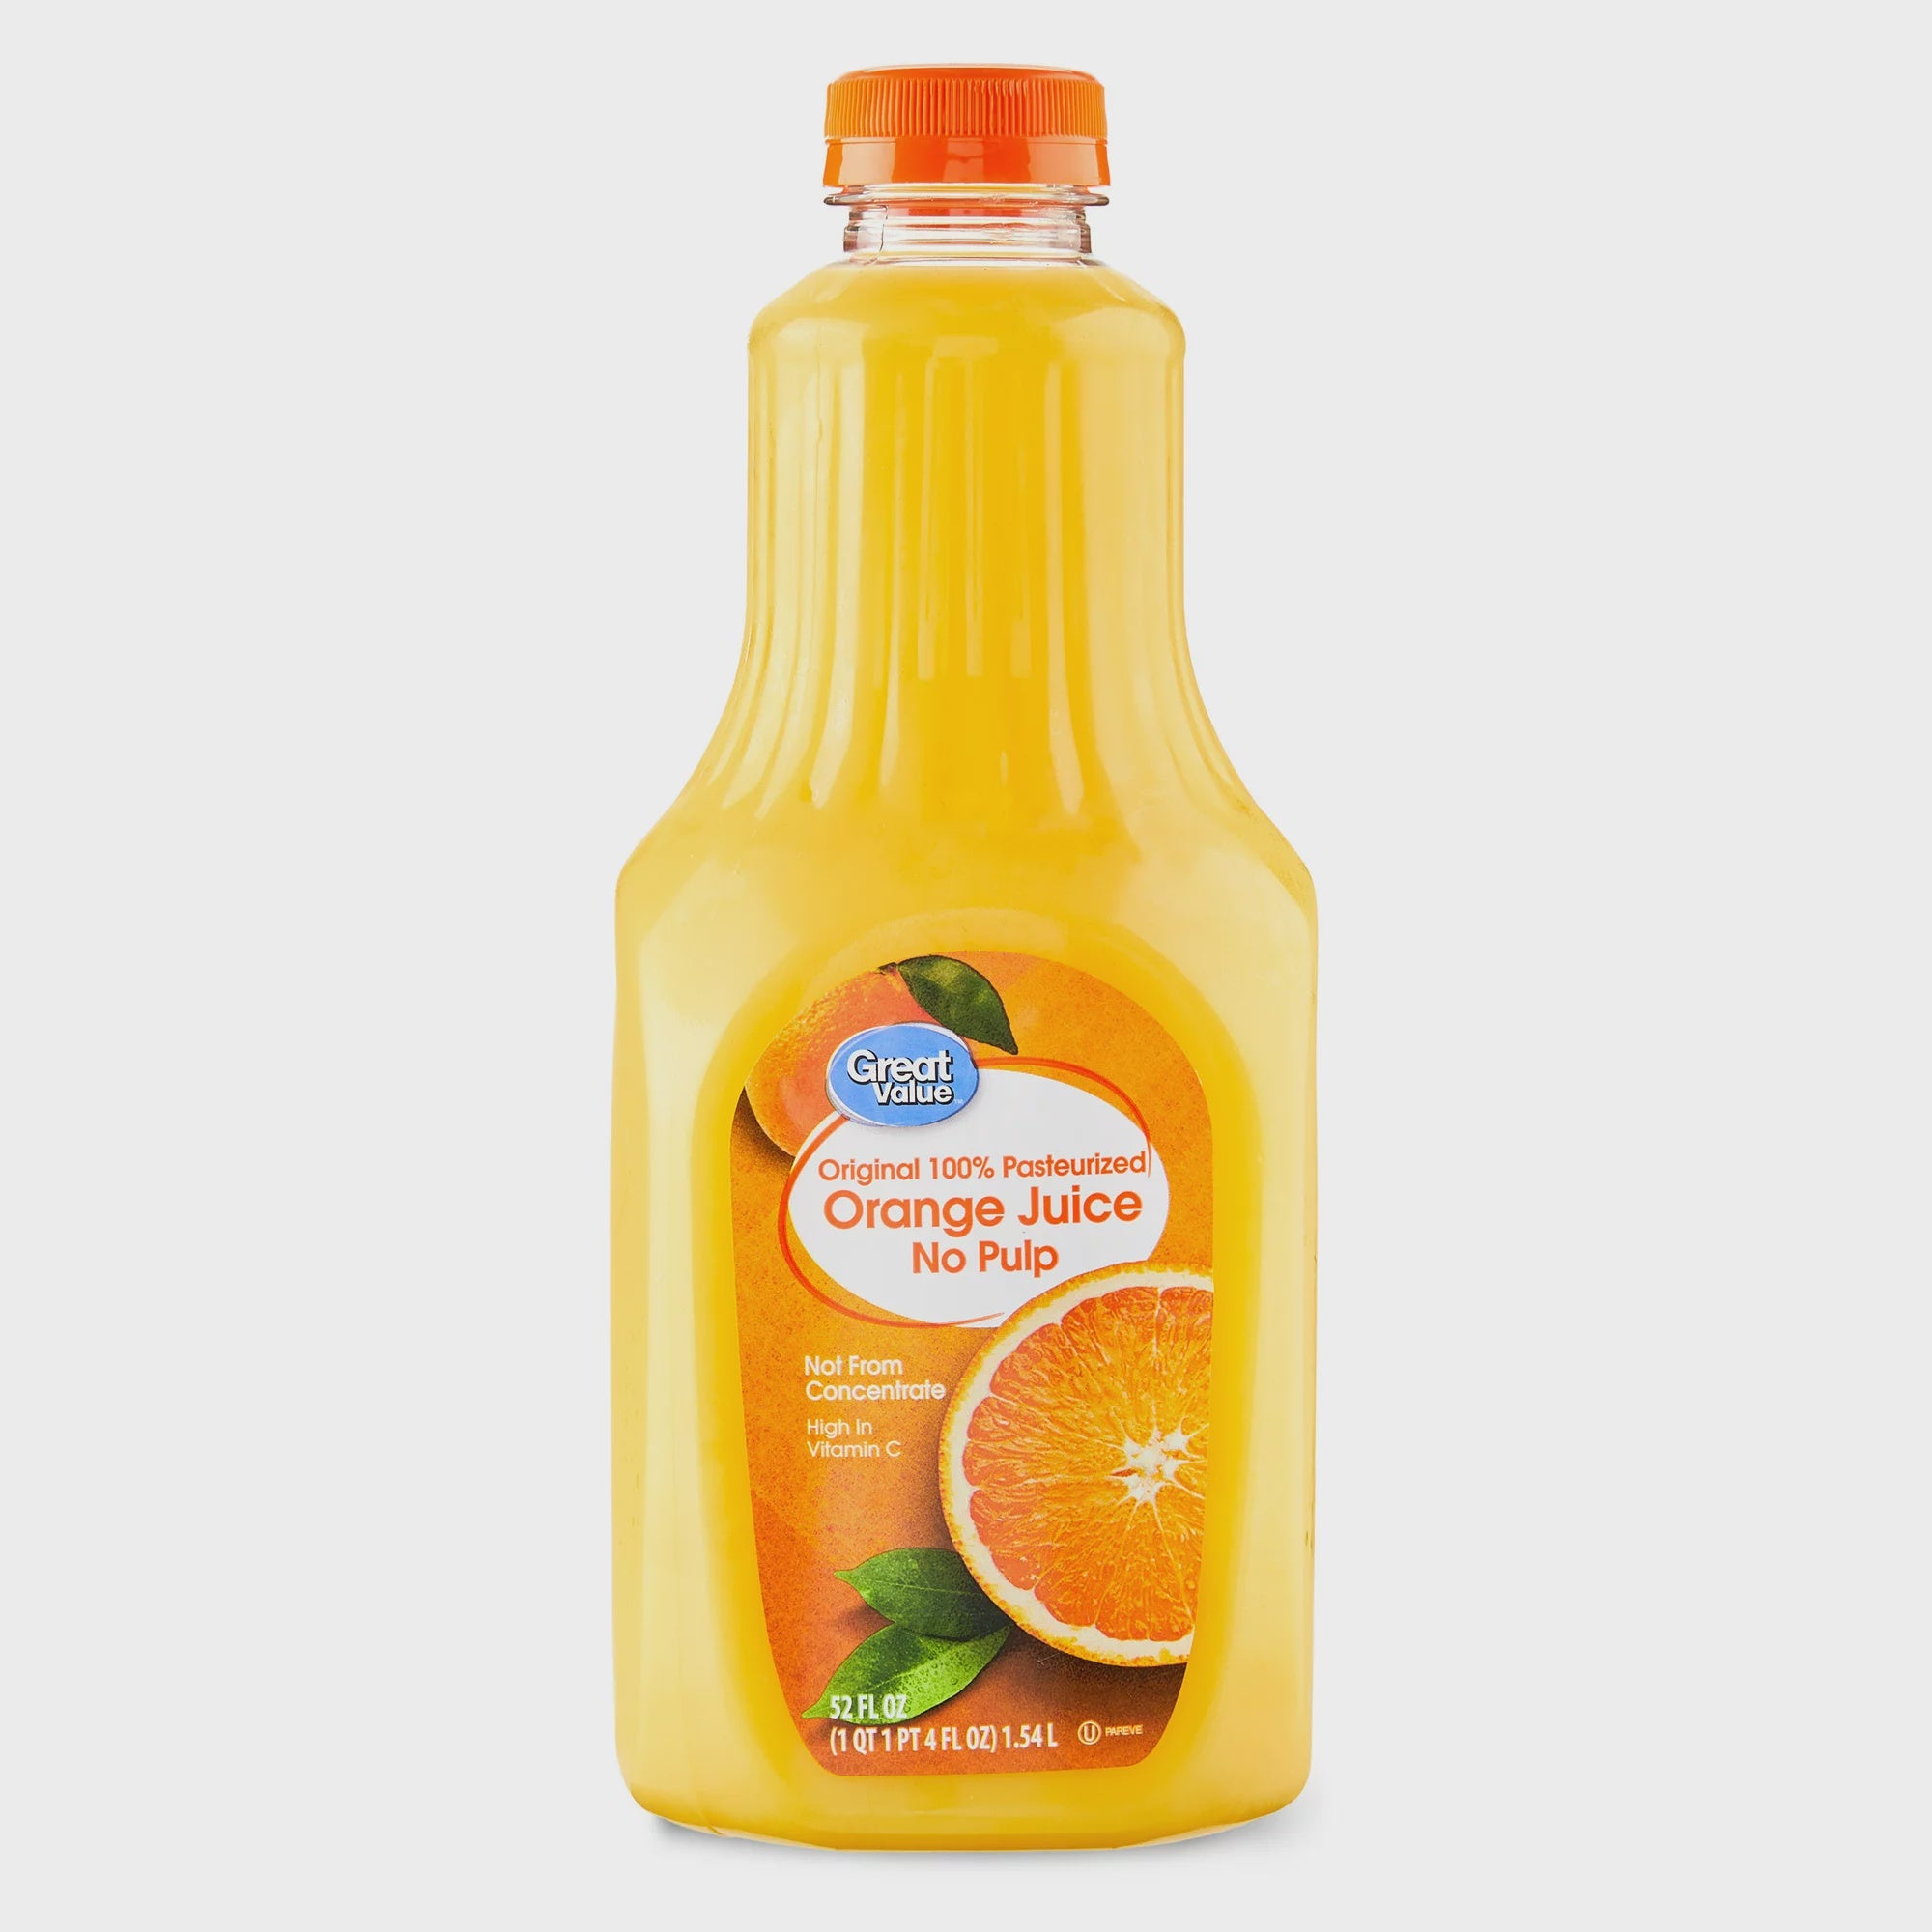 Great Value 100% Pasteurized No Pulp Orange Juice, 52 oz